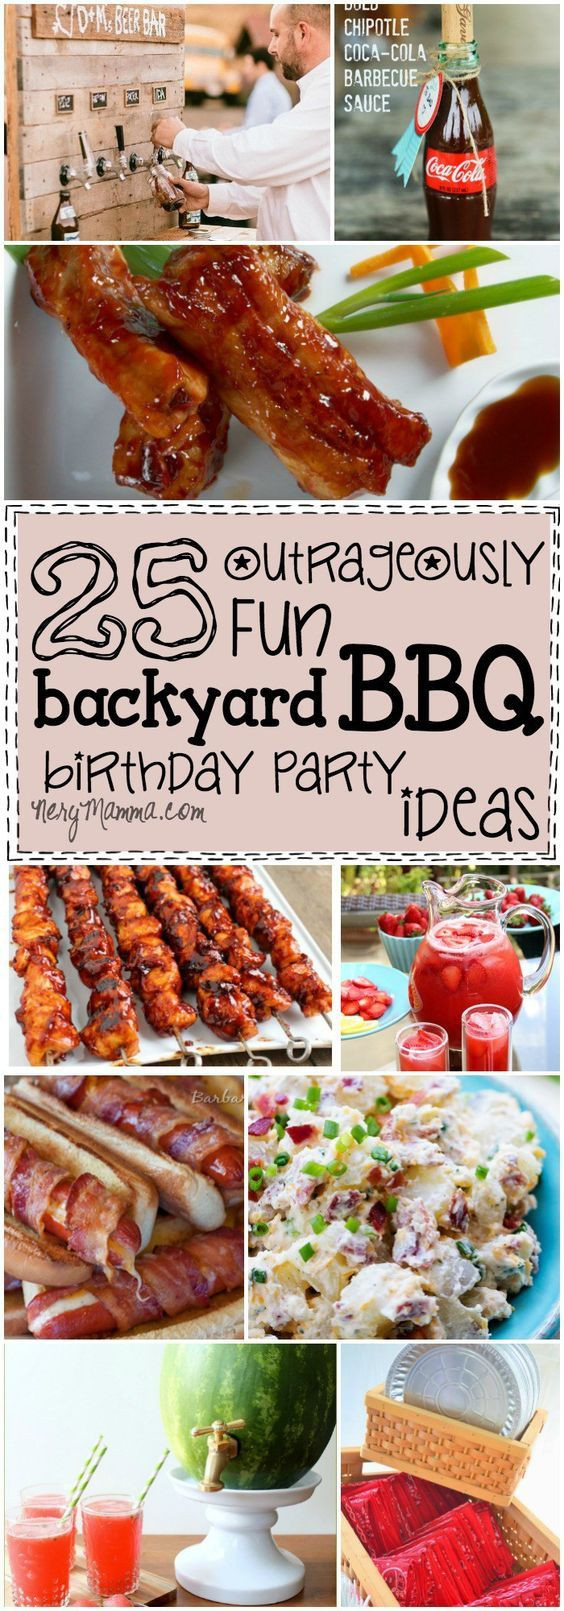 Backyard Bbq Birthday Party Ideas
 Backyard bbq Birthday party ideas and Party ideas on